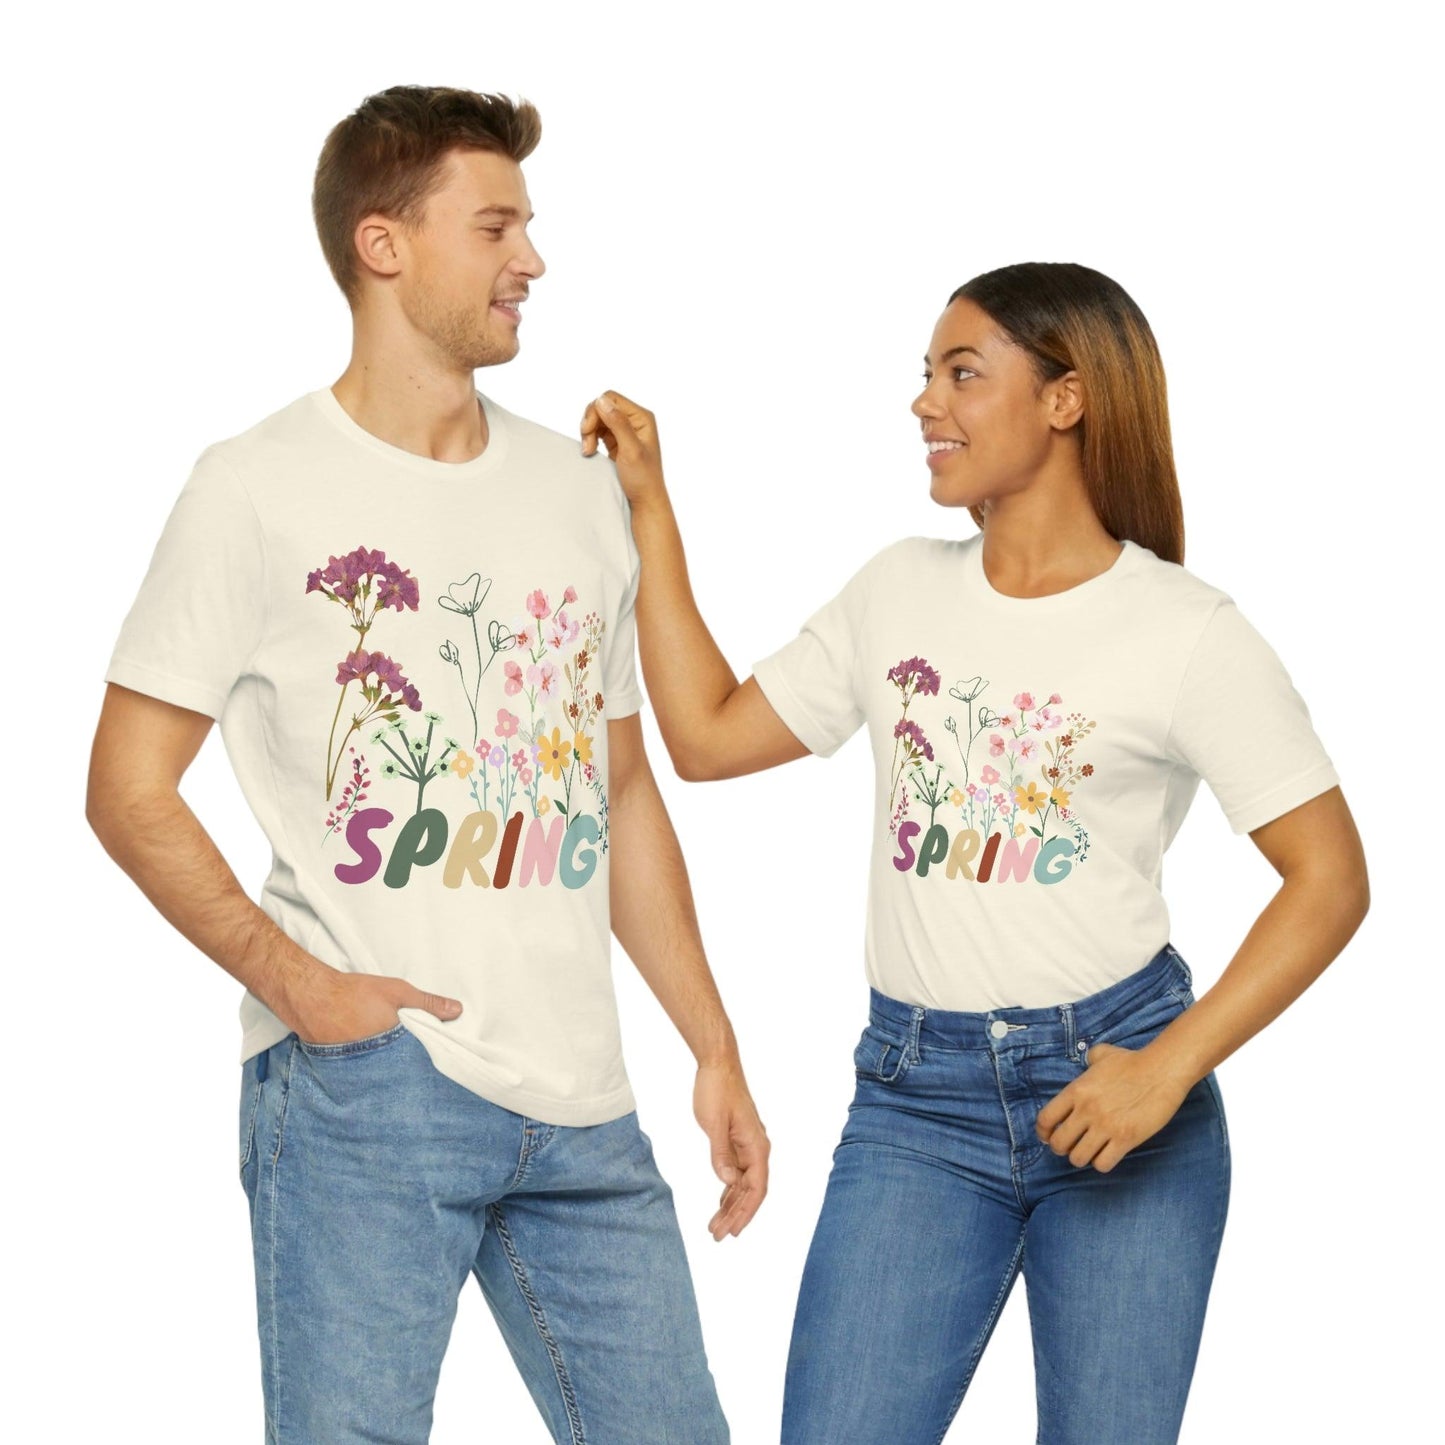 Spring Shirt, Flower T shirt, Vintage Botanical Shirt, Vintage T-shirt, Graphic Tshirt, Botanical Print, Vintage Flower Shirt, Wildflower,